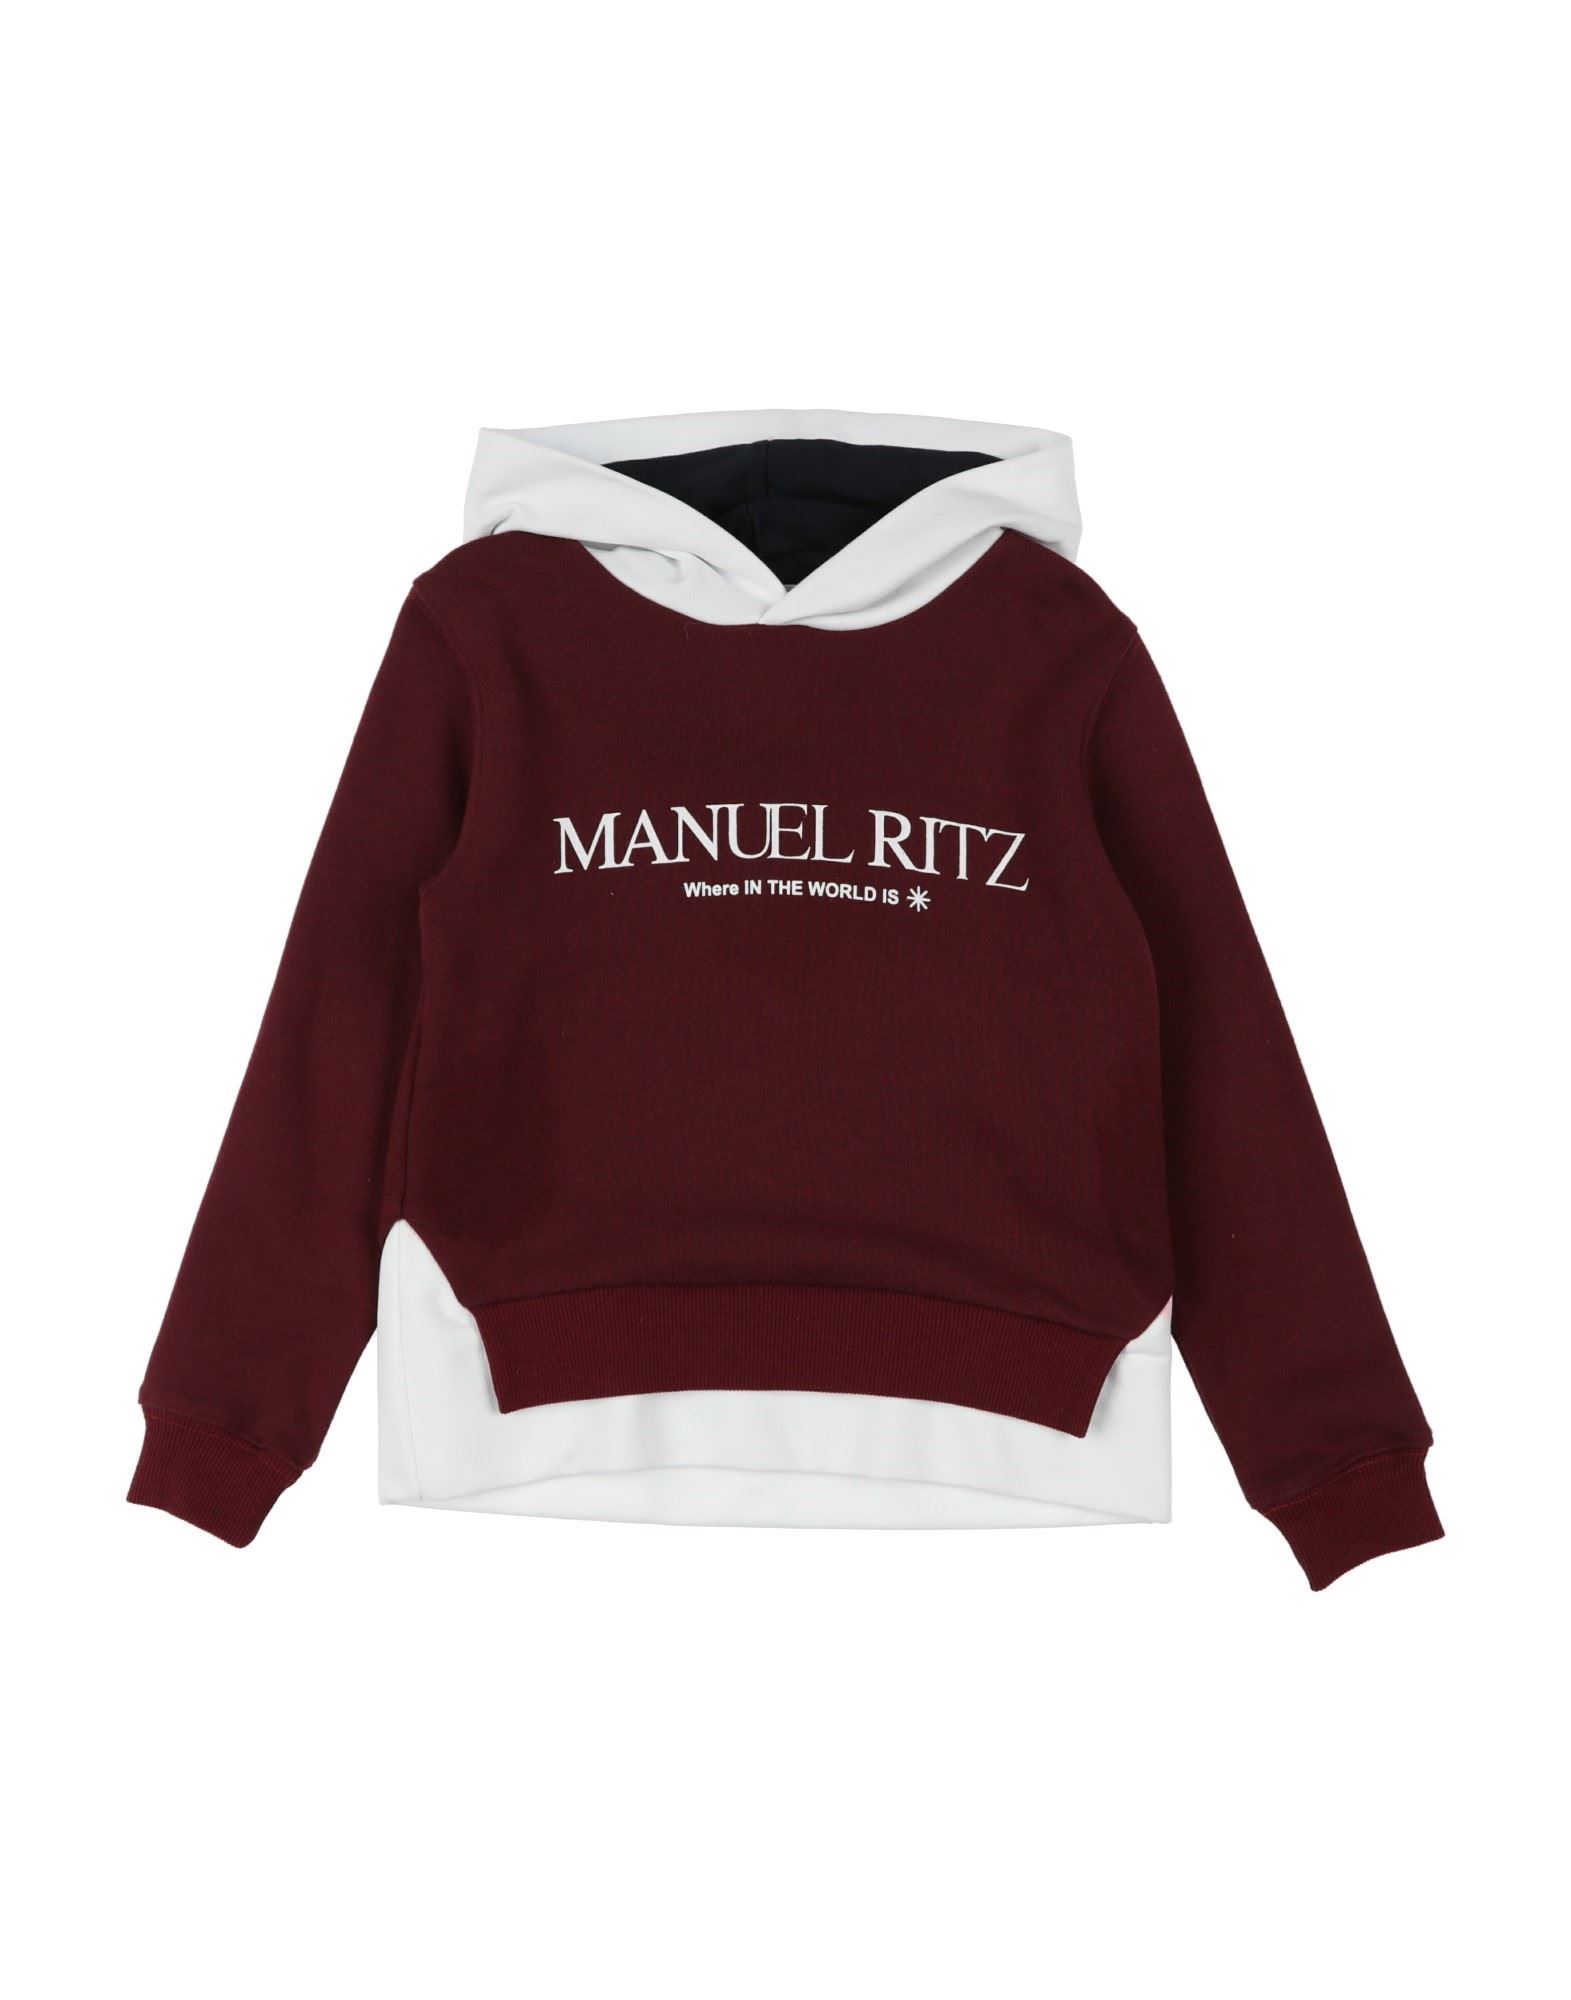 MANUEL RITZ Sweatshirt Kinder Bordeaux von MANUEL RITZ